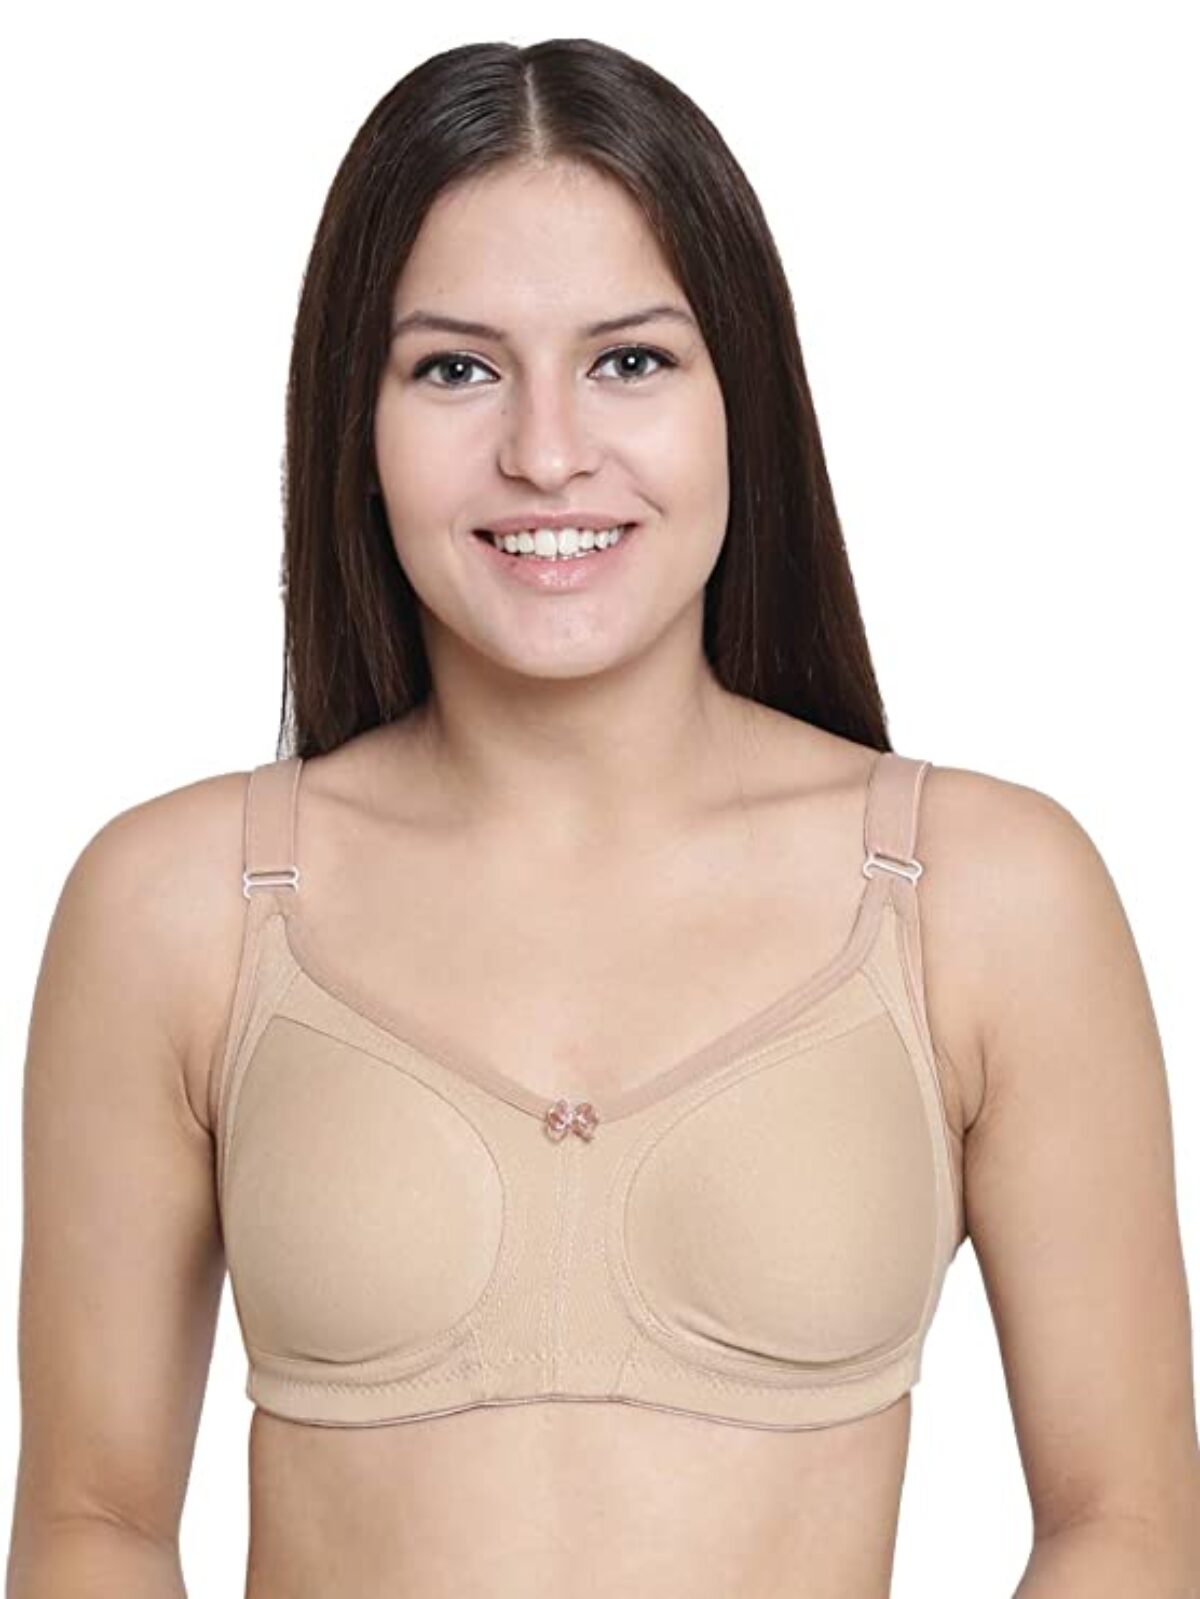 Krutika Plain - India's most popular dailywear bra with X support. 